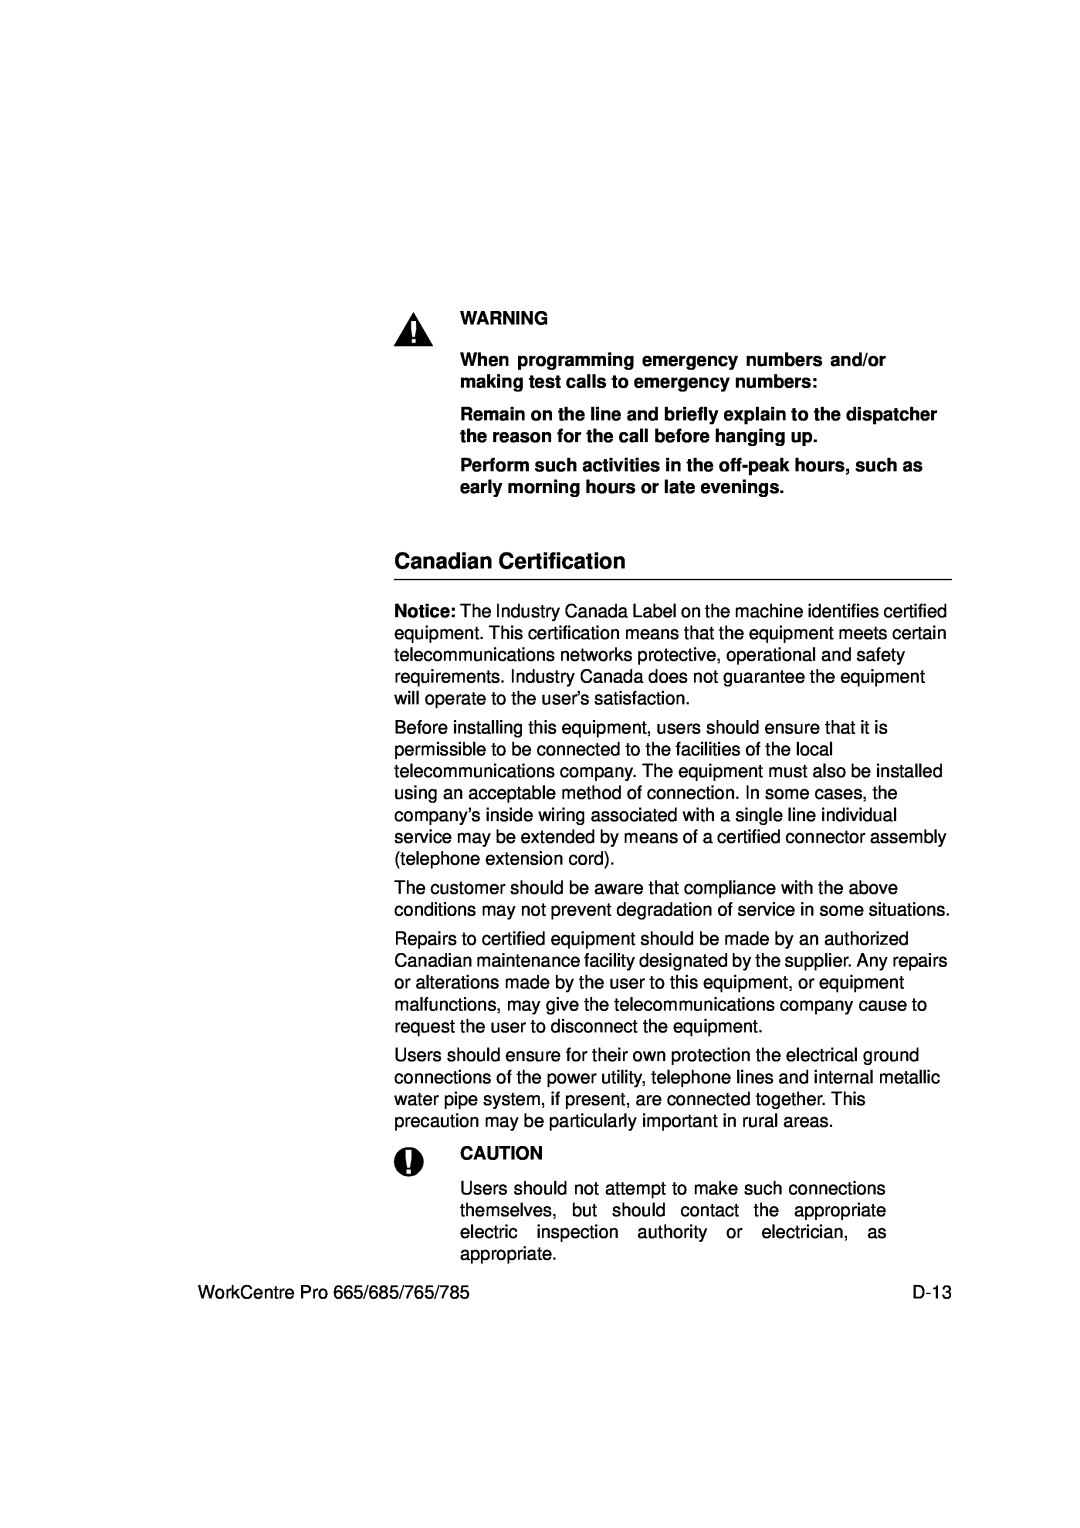 Xerox 665, 765, 685, 785 manual Canadian Certification 